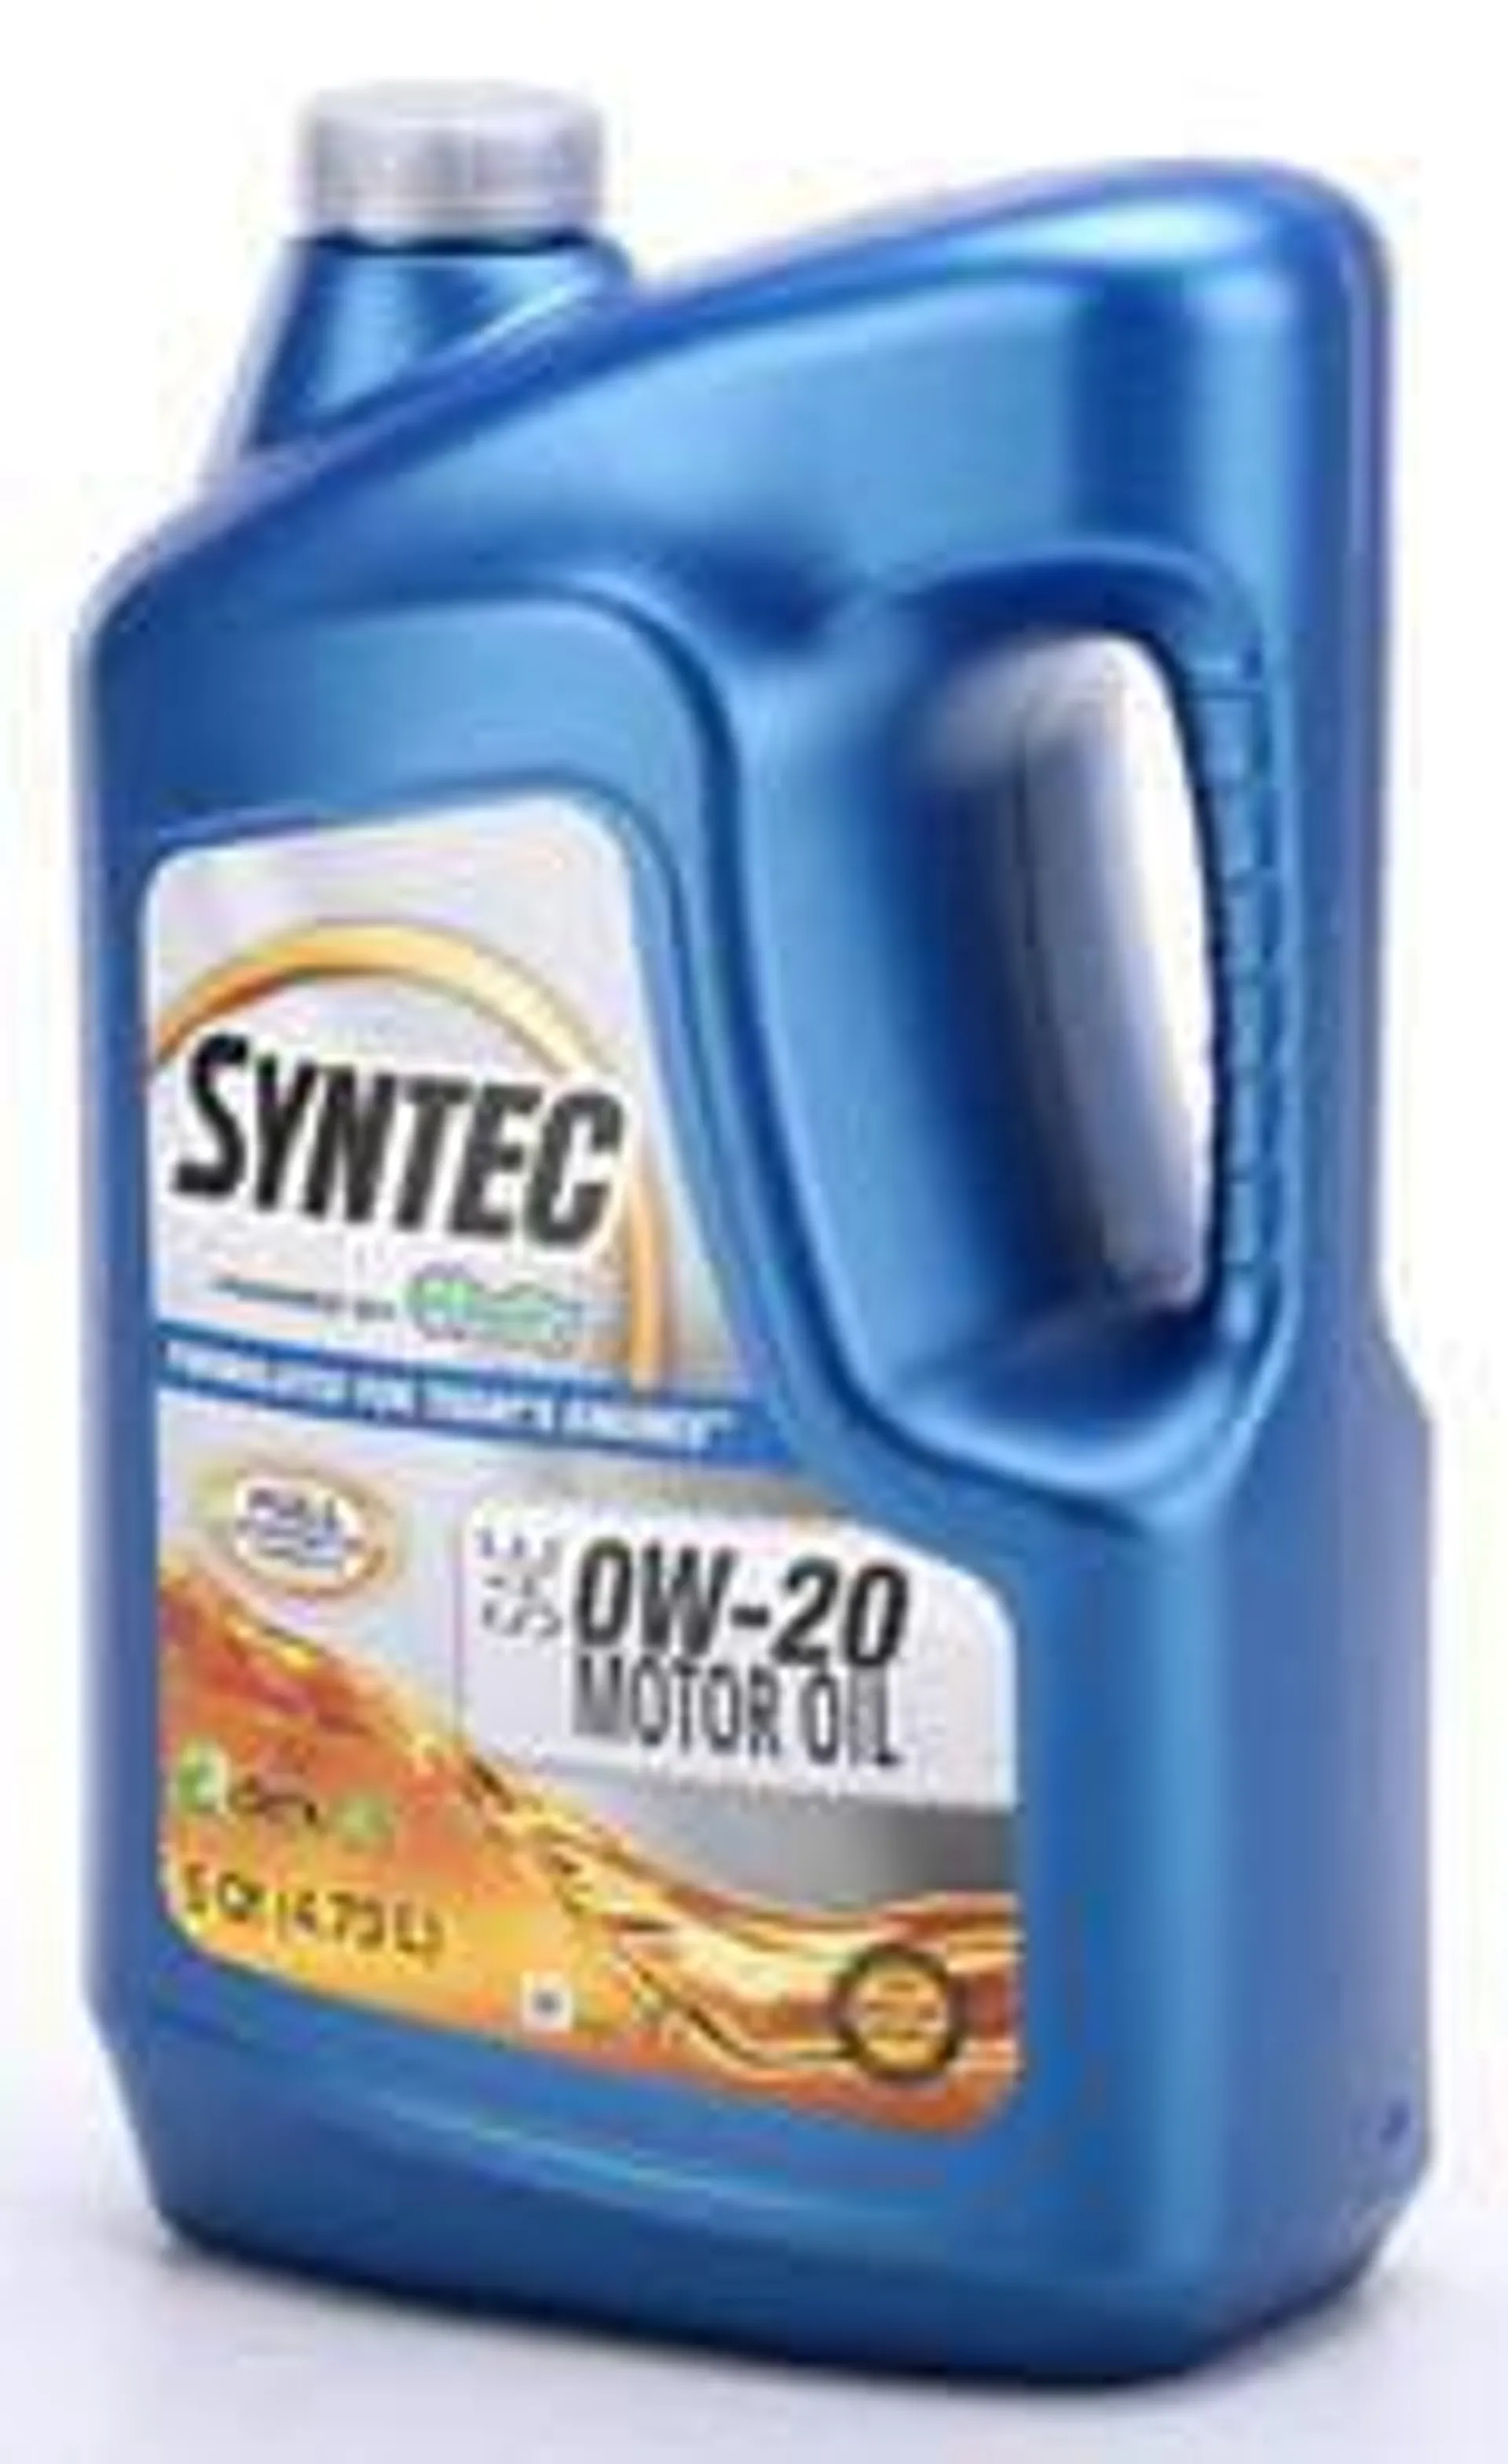 SYNTEC Full Synthetic Motor Oil 0W-20 5 Quart - SYN0-20-5QT